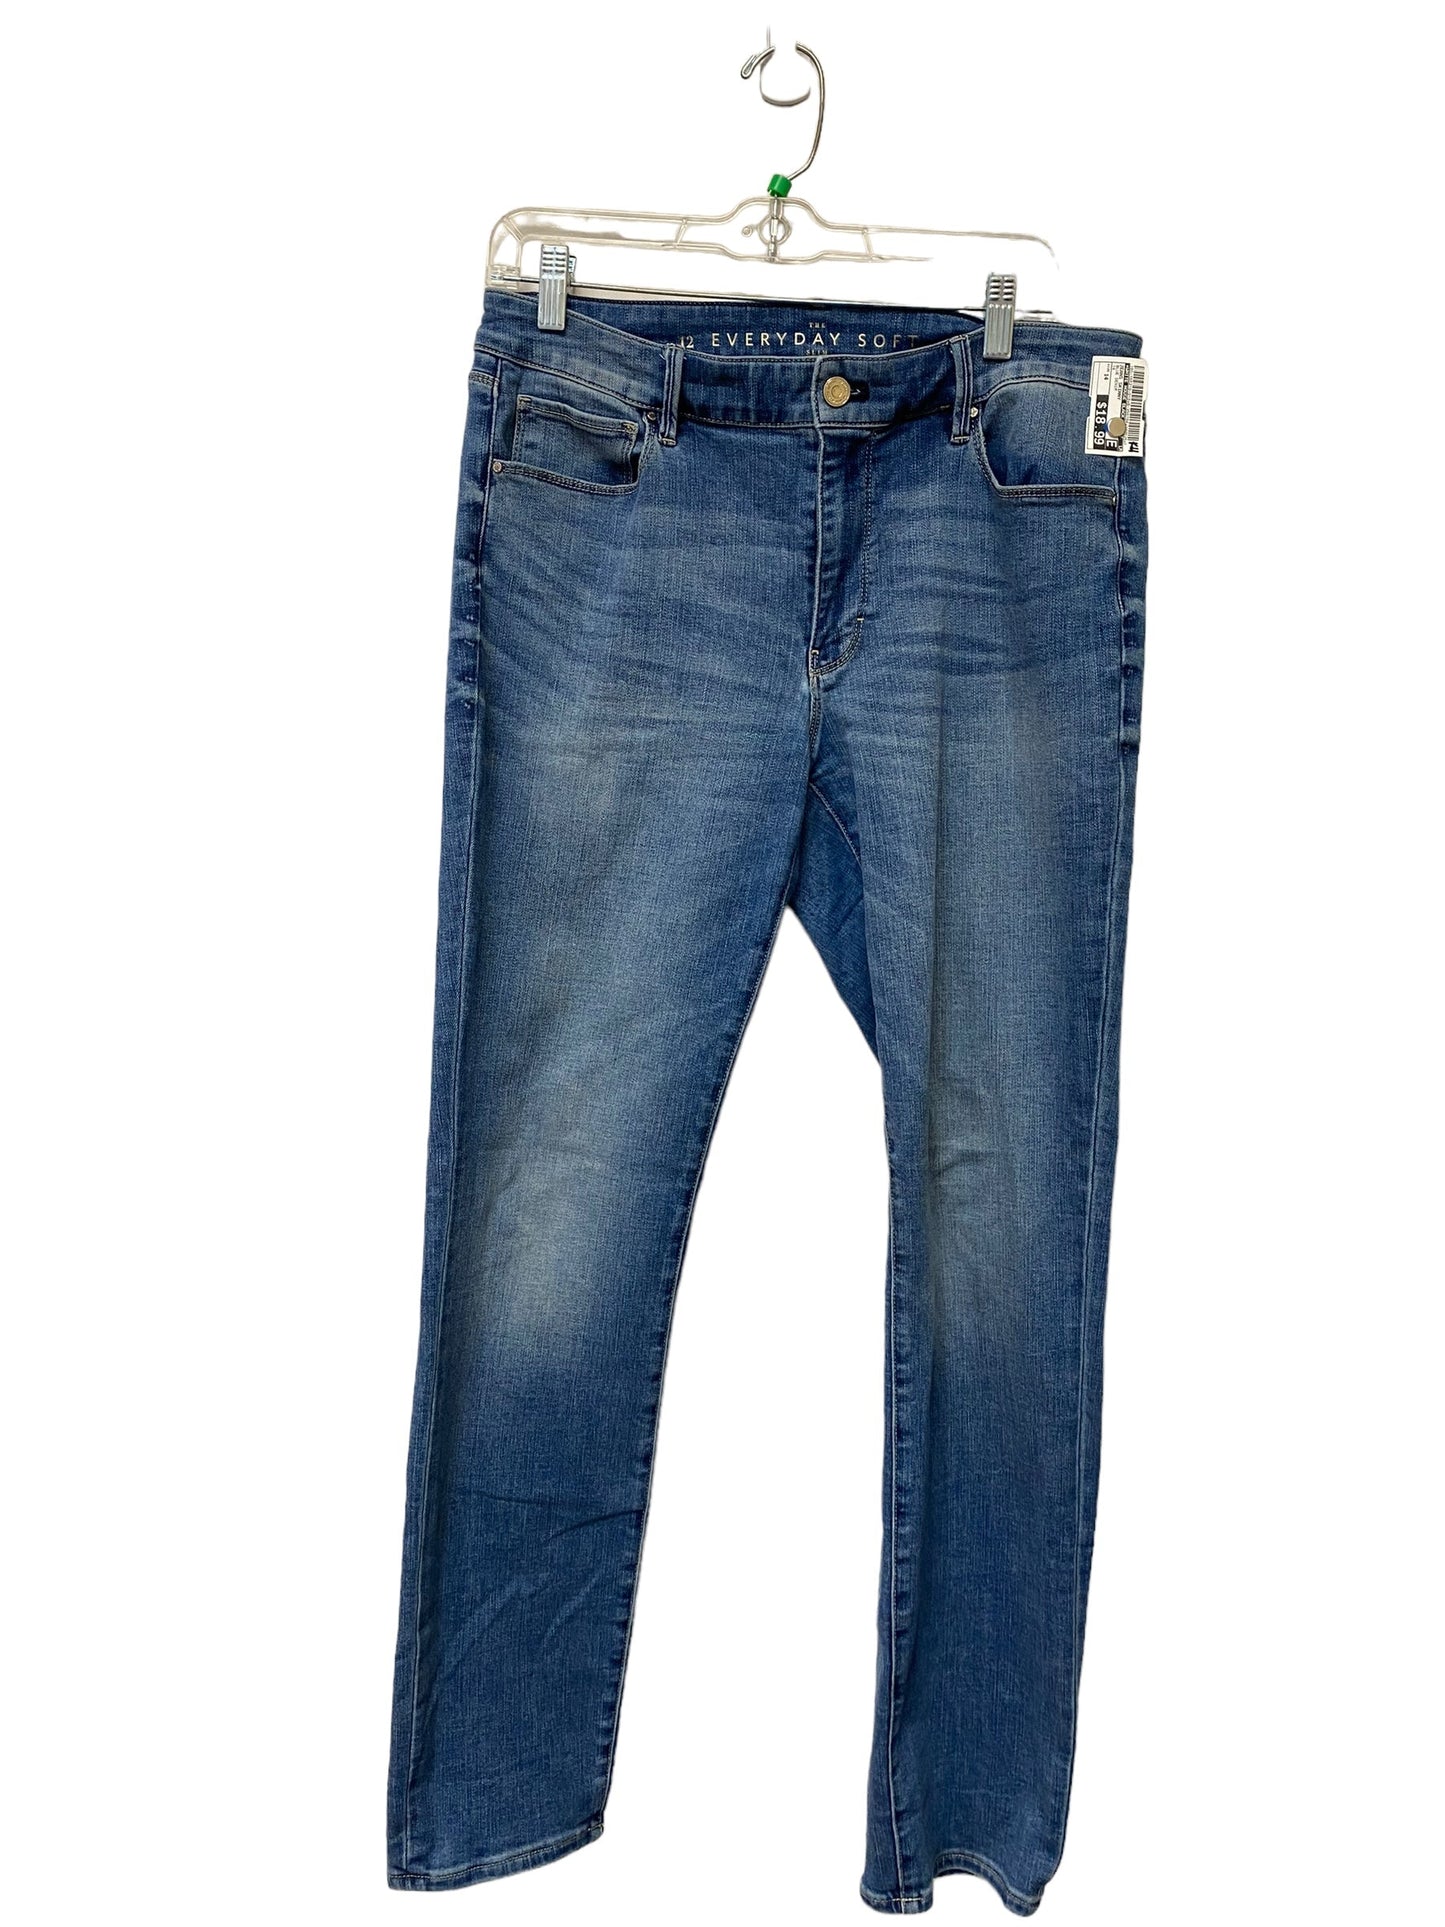 Jeans Skinny By White House Black Market  Size: 14